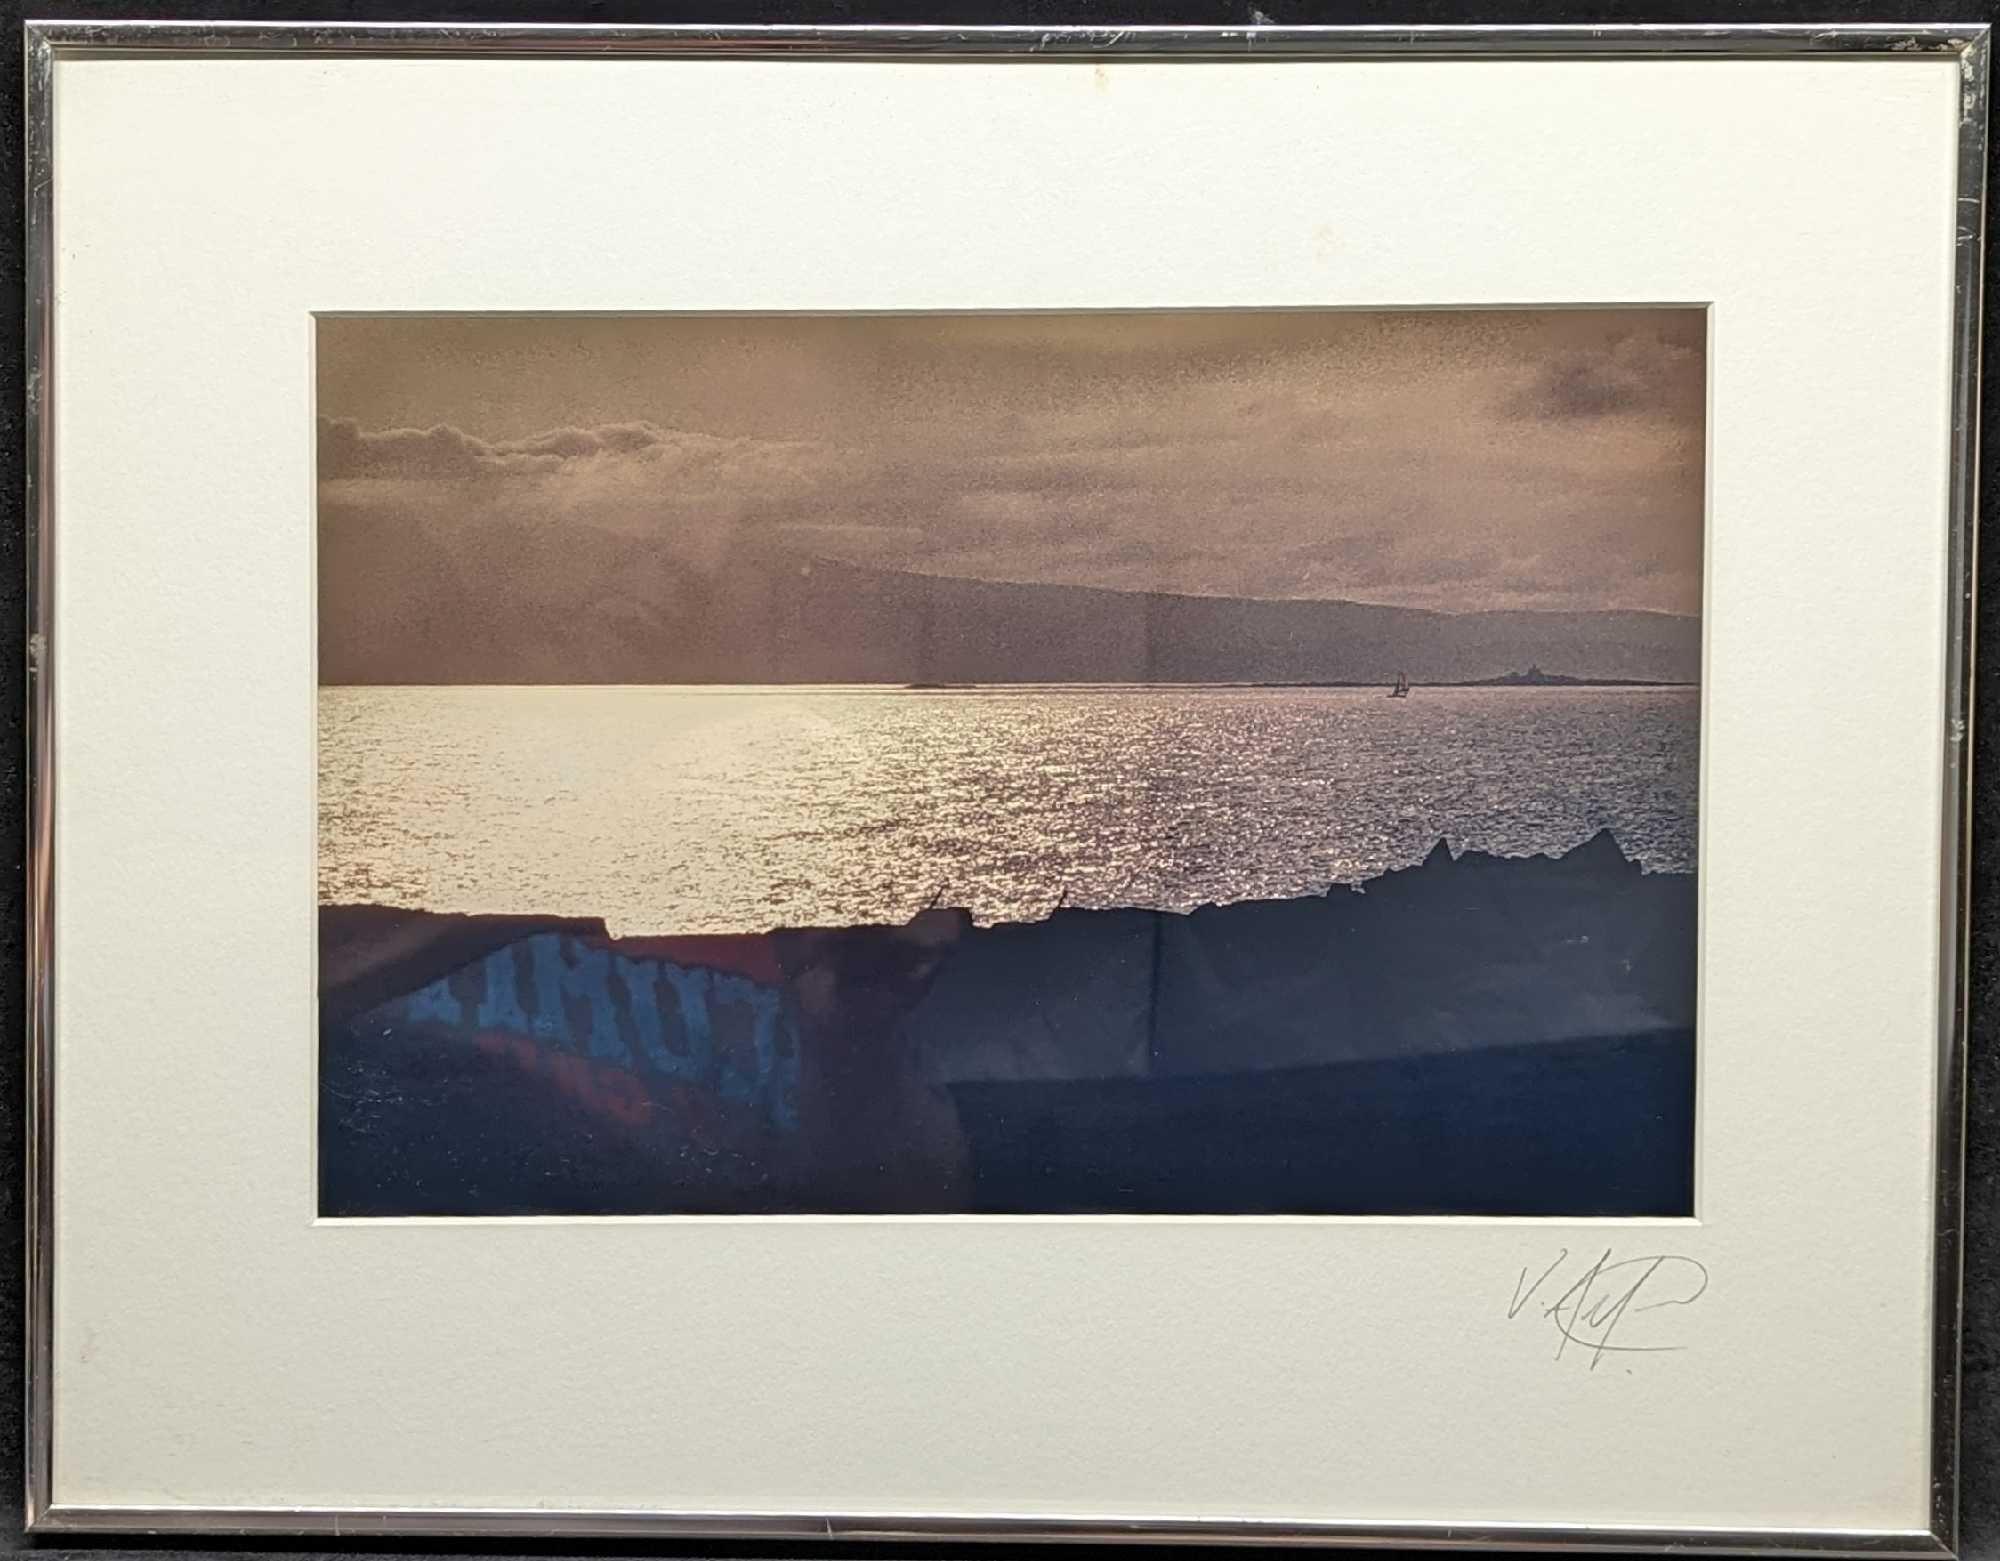 Framed Signed Coastal Photo Print